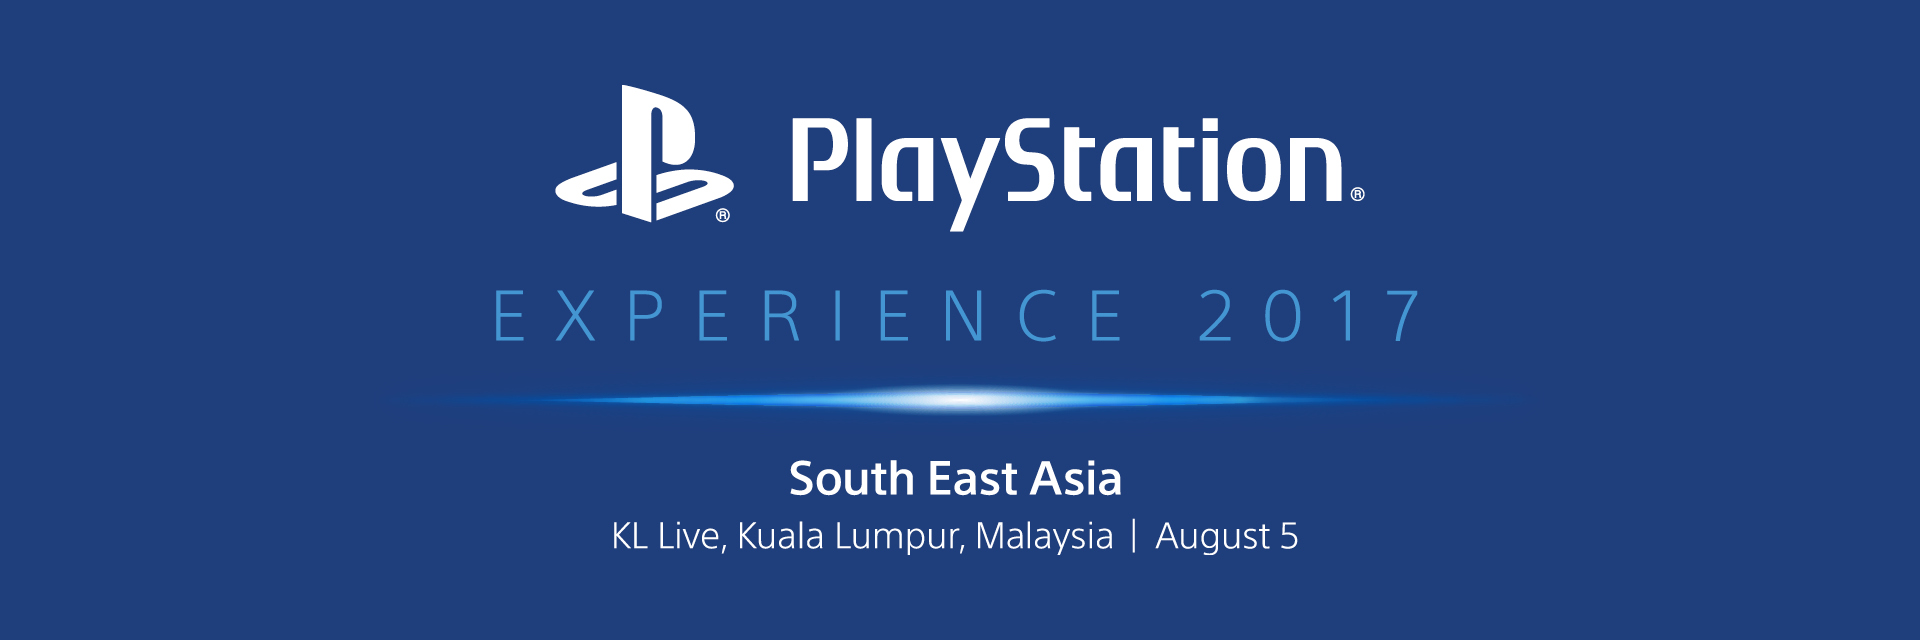 PlayStation Experience SEA 2017